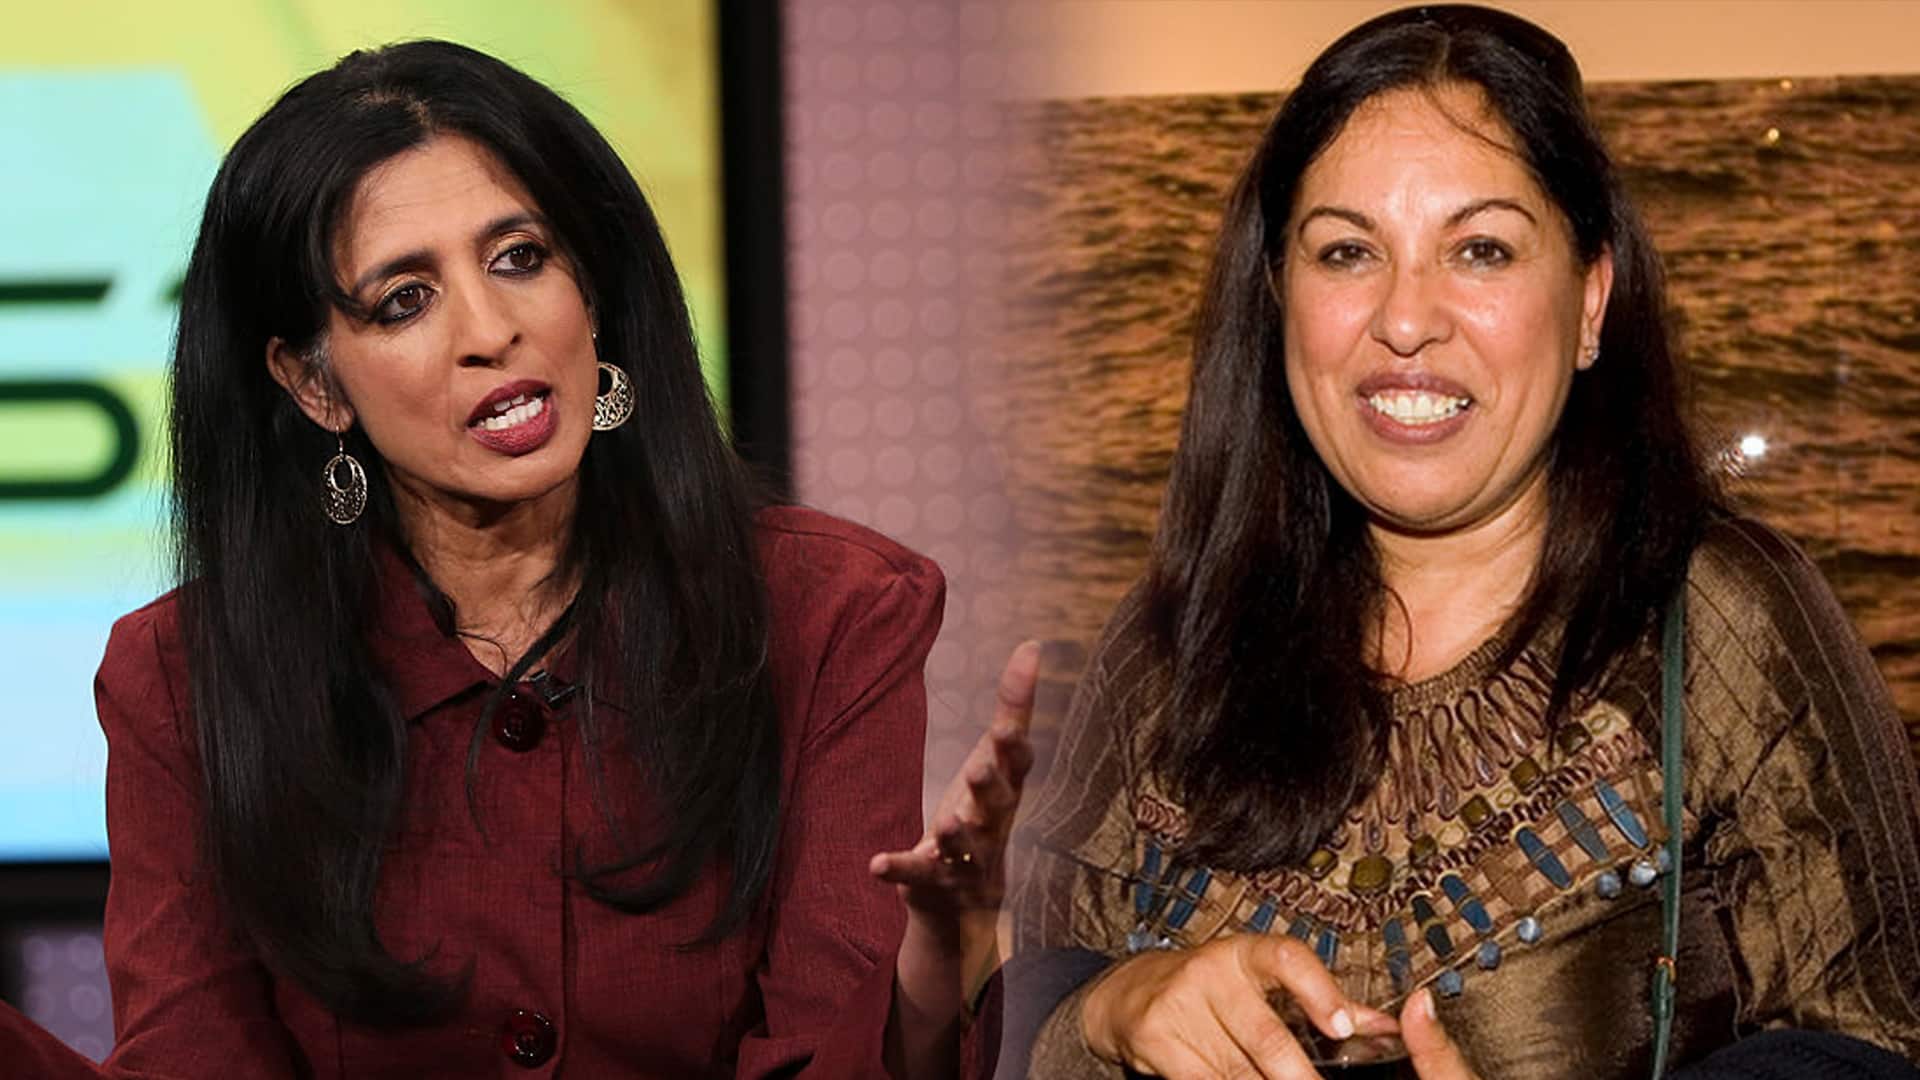 Meet Jayshree Ullal and Neerja Sethi: Indian-origin women on Forbes list of America's richest self-made women